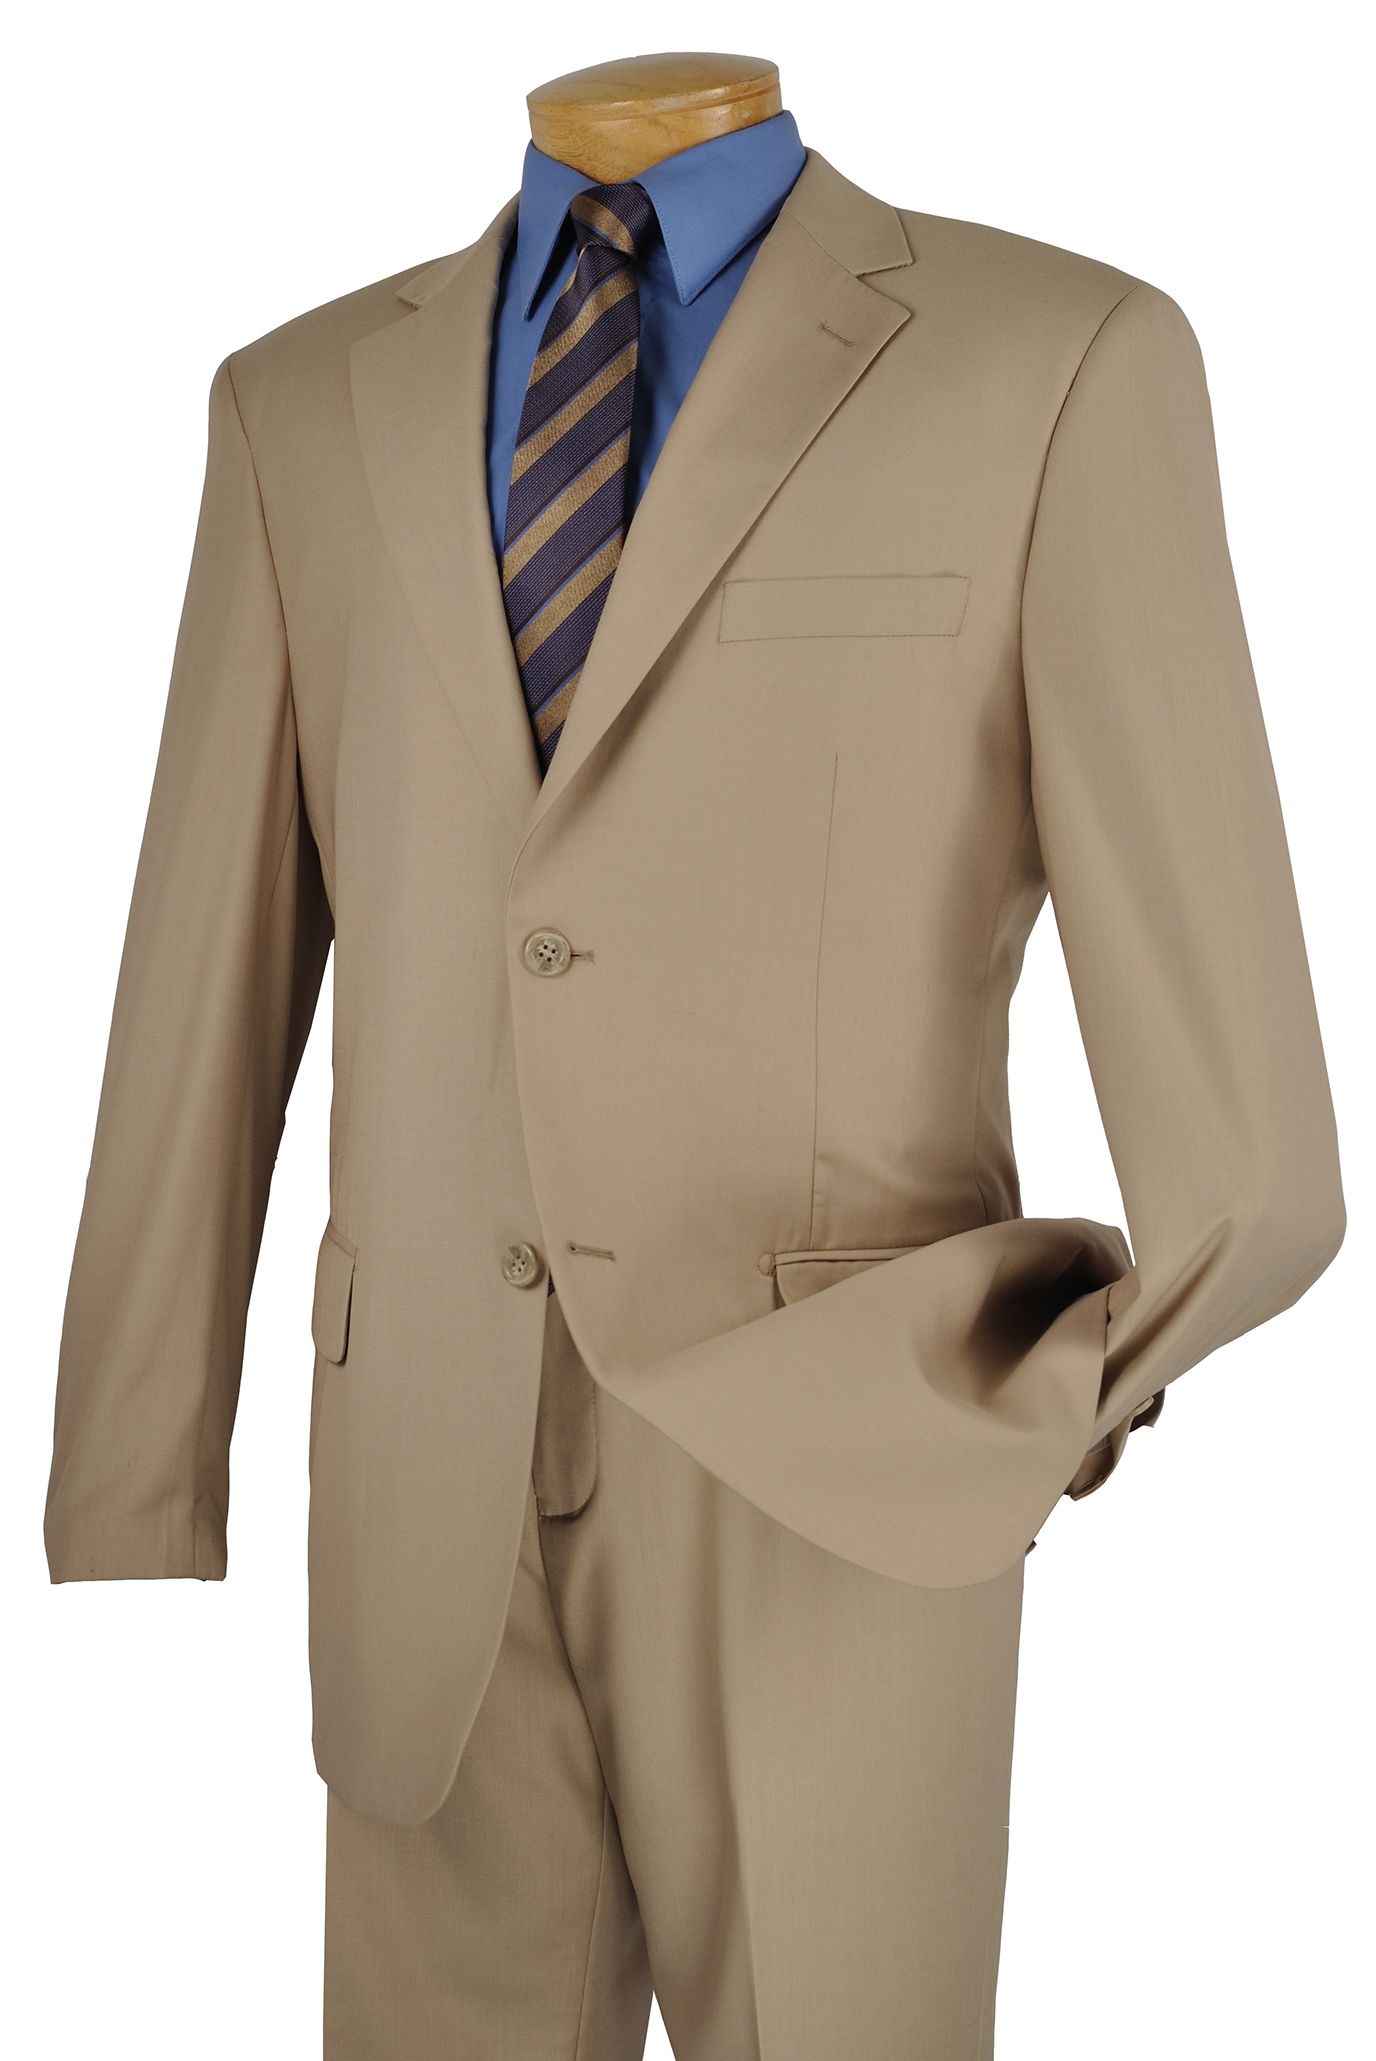 Vinci Men's Wool Feel Executive Suit 2 Piece Solid Color